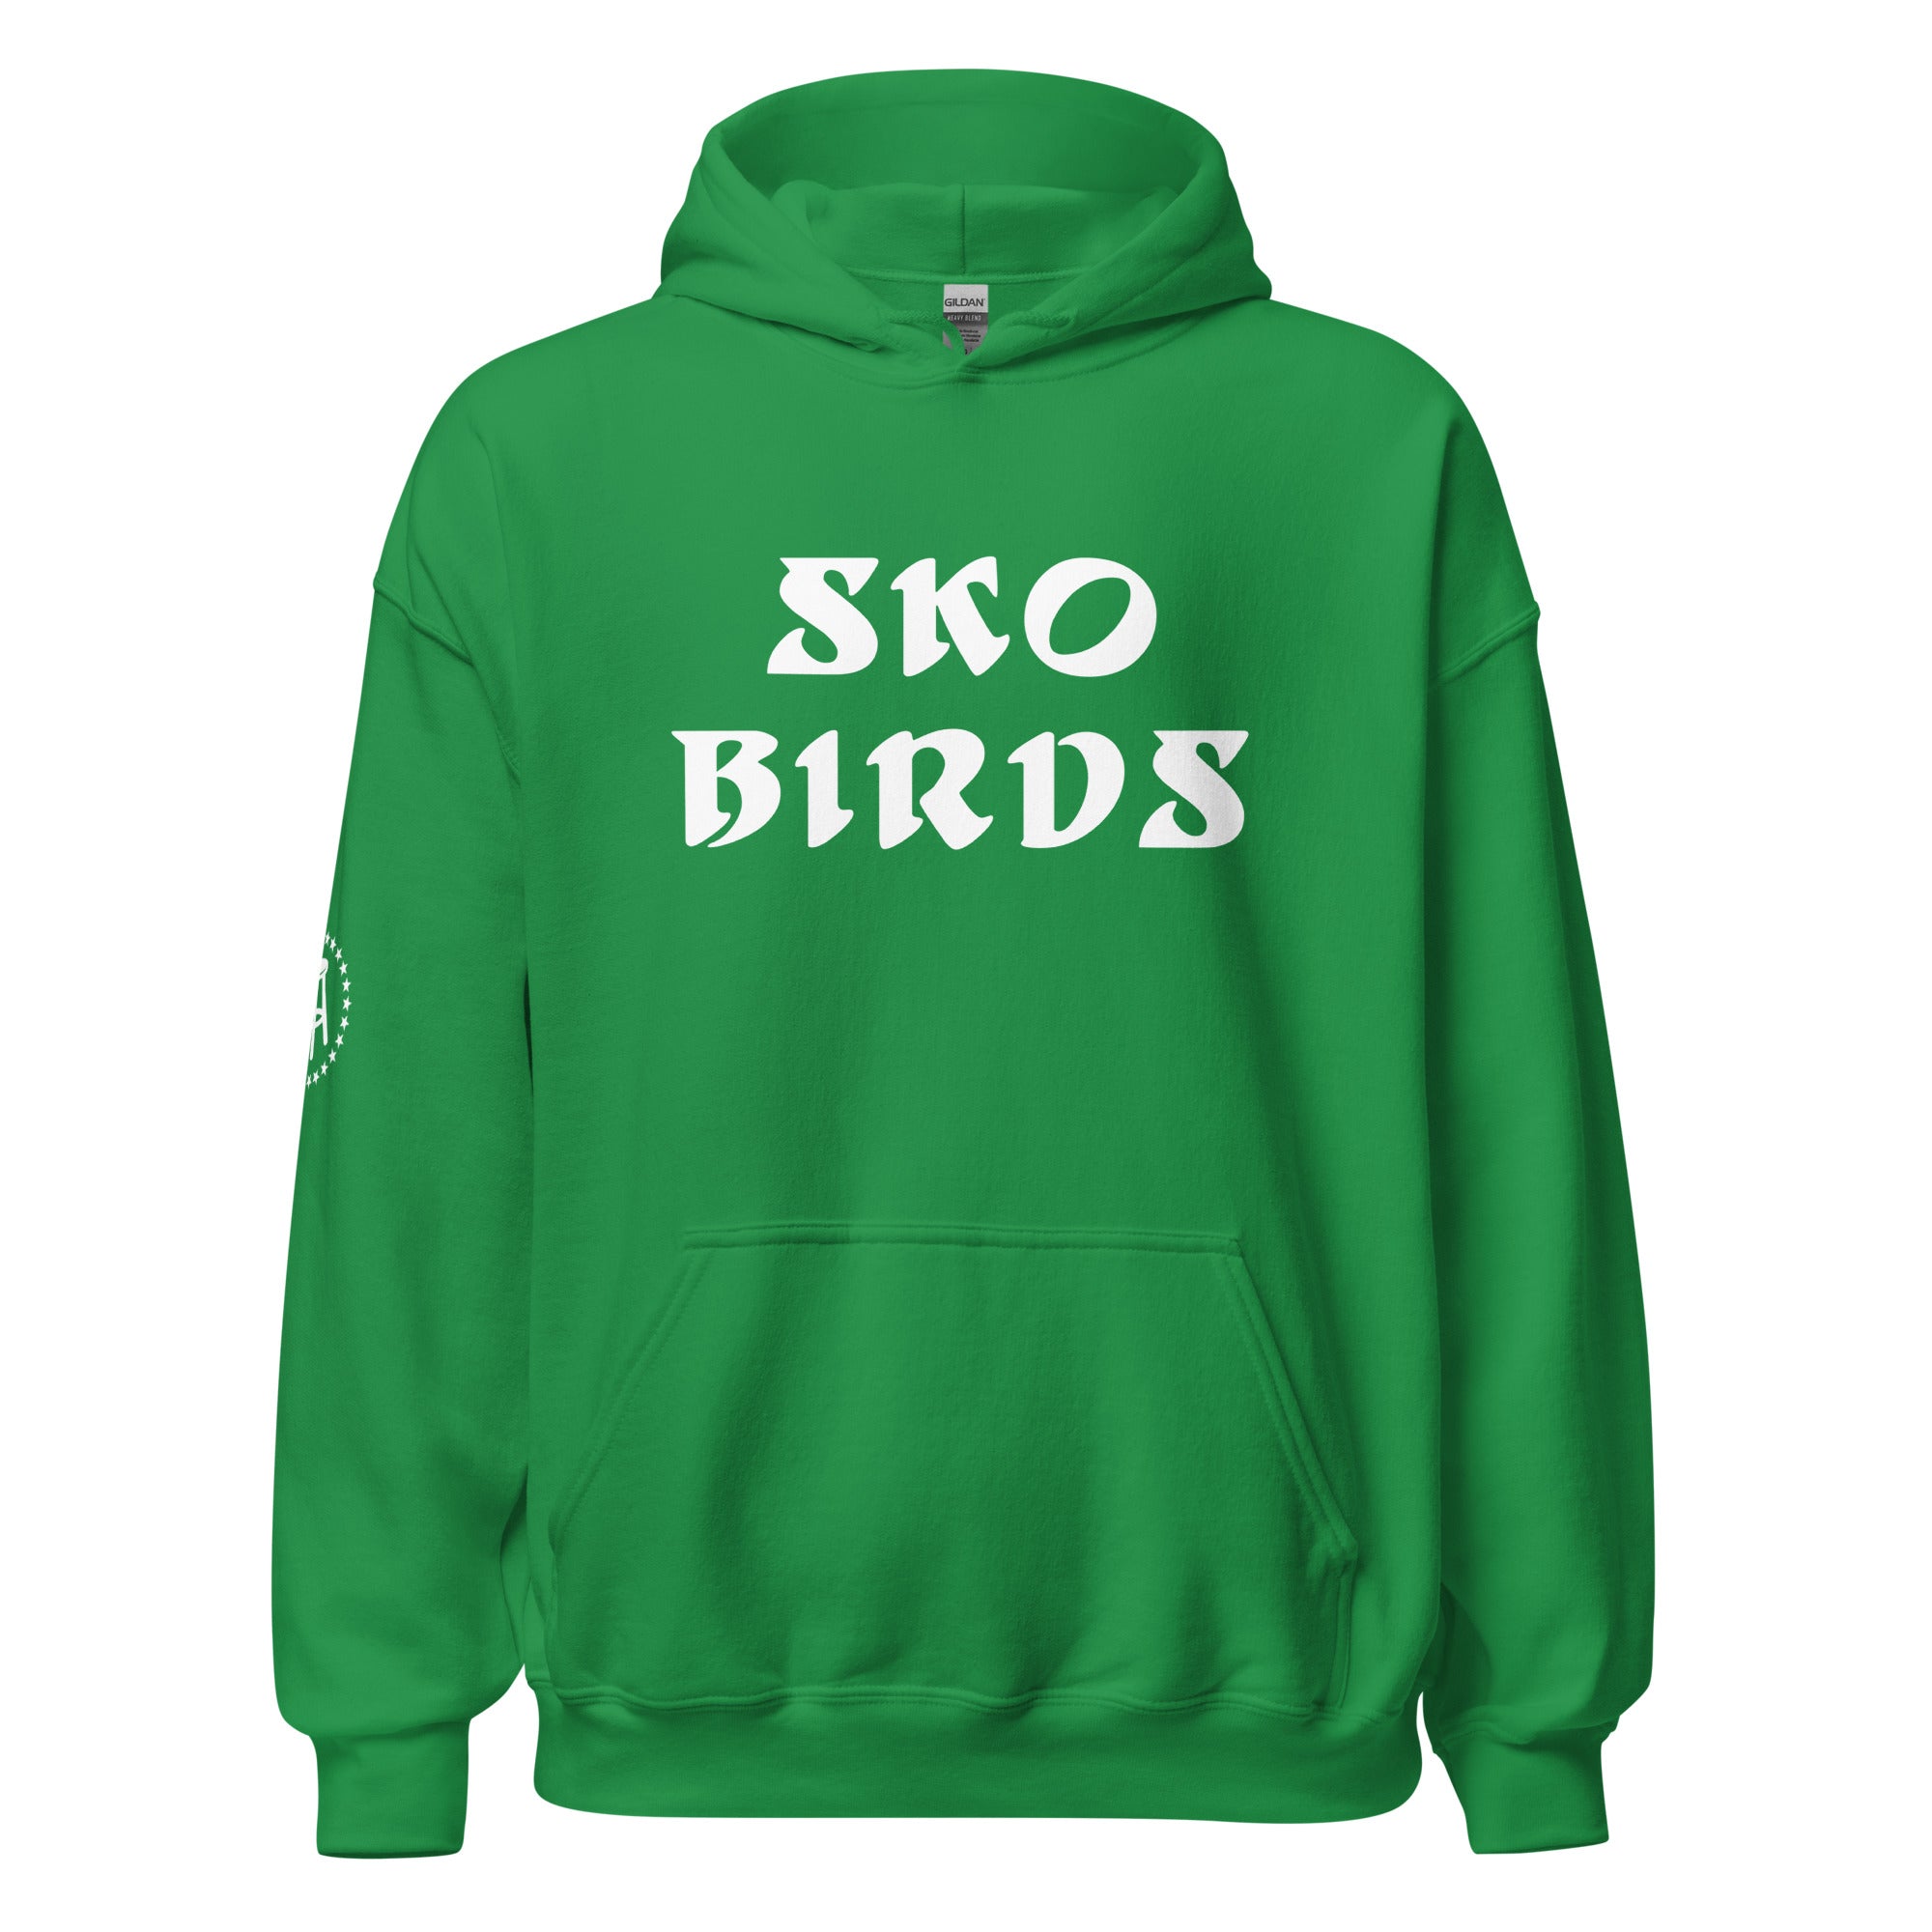 Sko Birds Hoodie-Hoodies & Sweatshirts-Barstool Sports-Irish Green-S-Barstool Sports